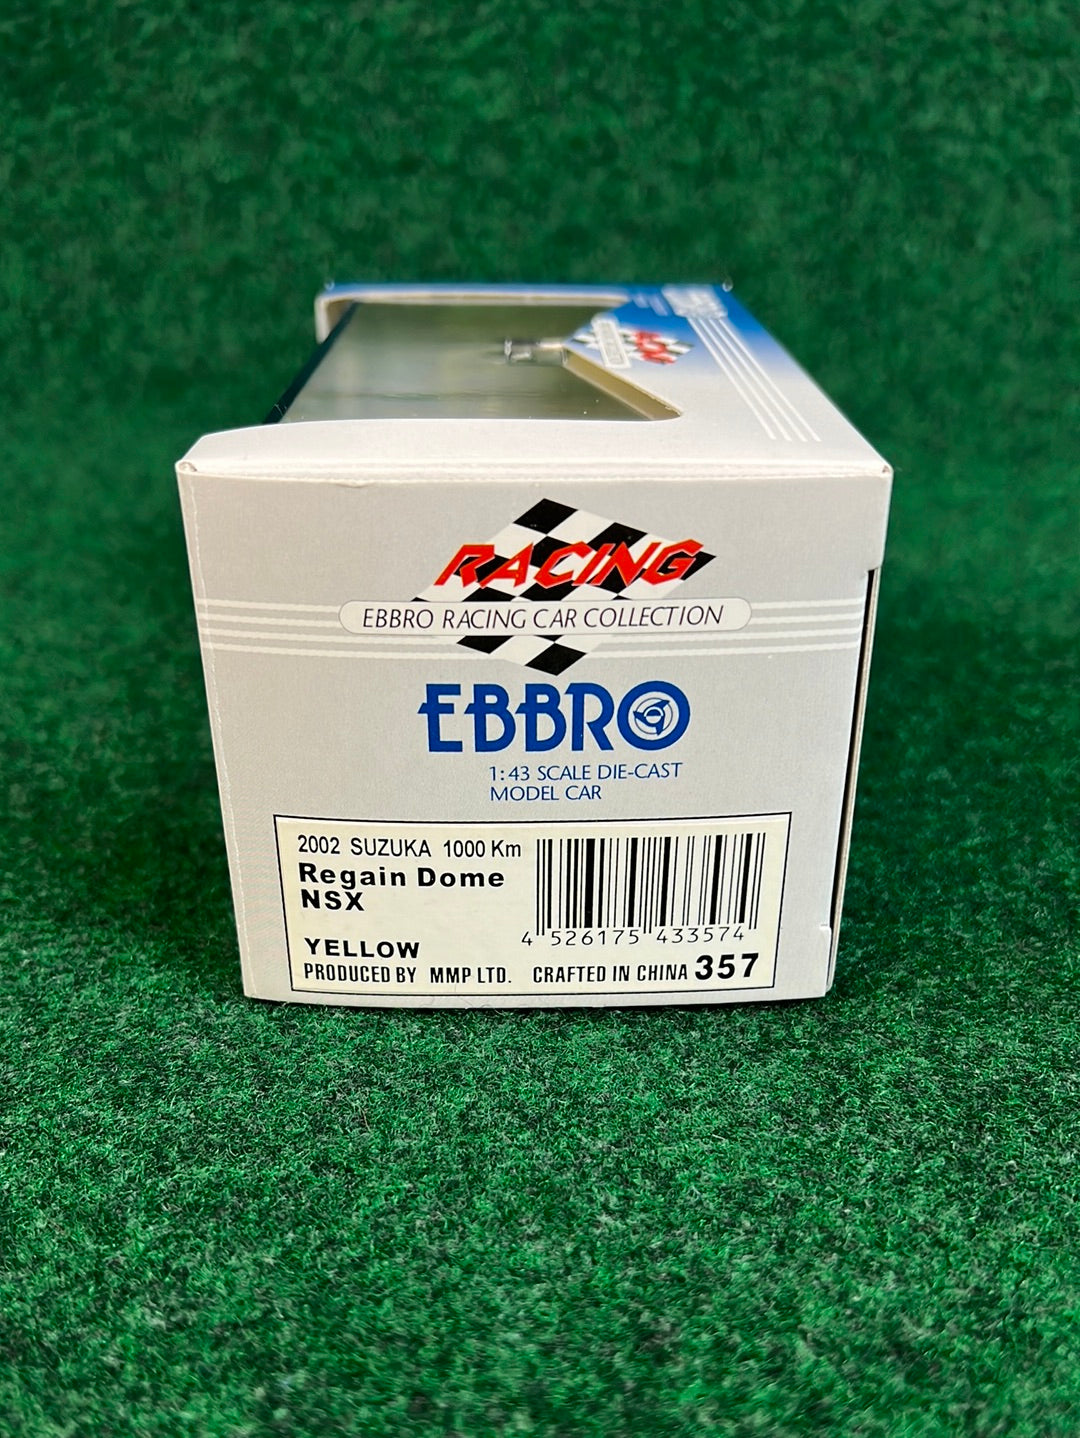 EBBRO Racing Car Collection: JGTC 2002 Regain DOME Honda NSX Suzuka 1000km 1/43 Scale Diecast